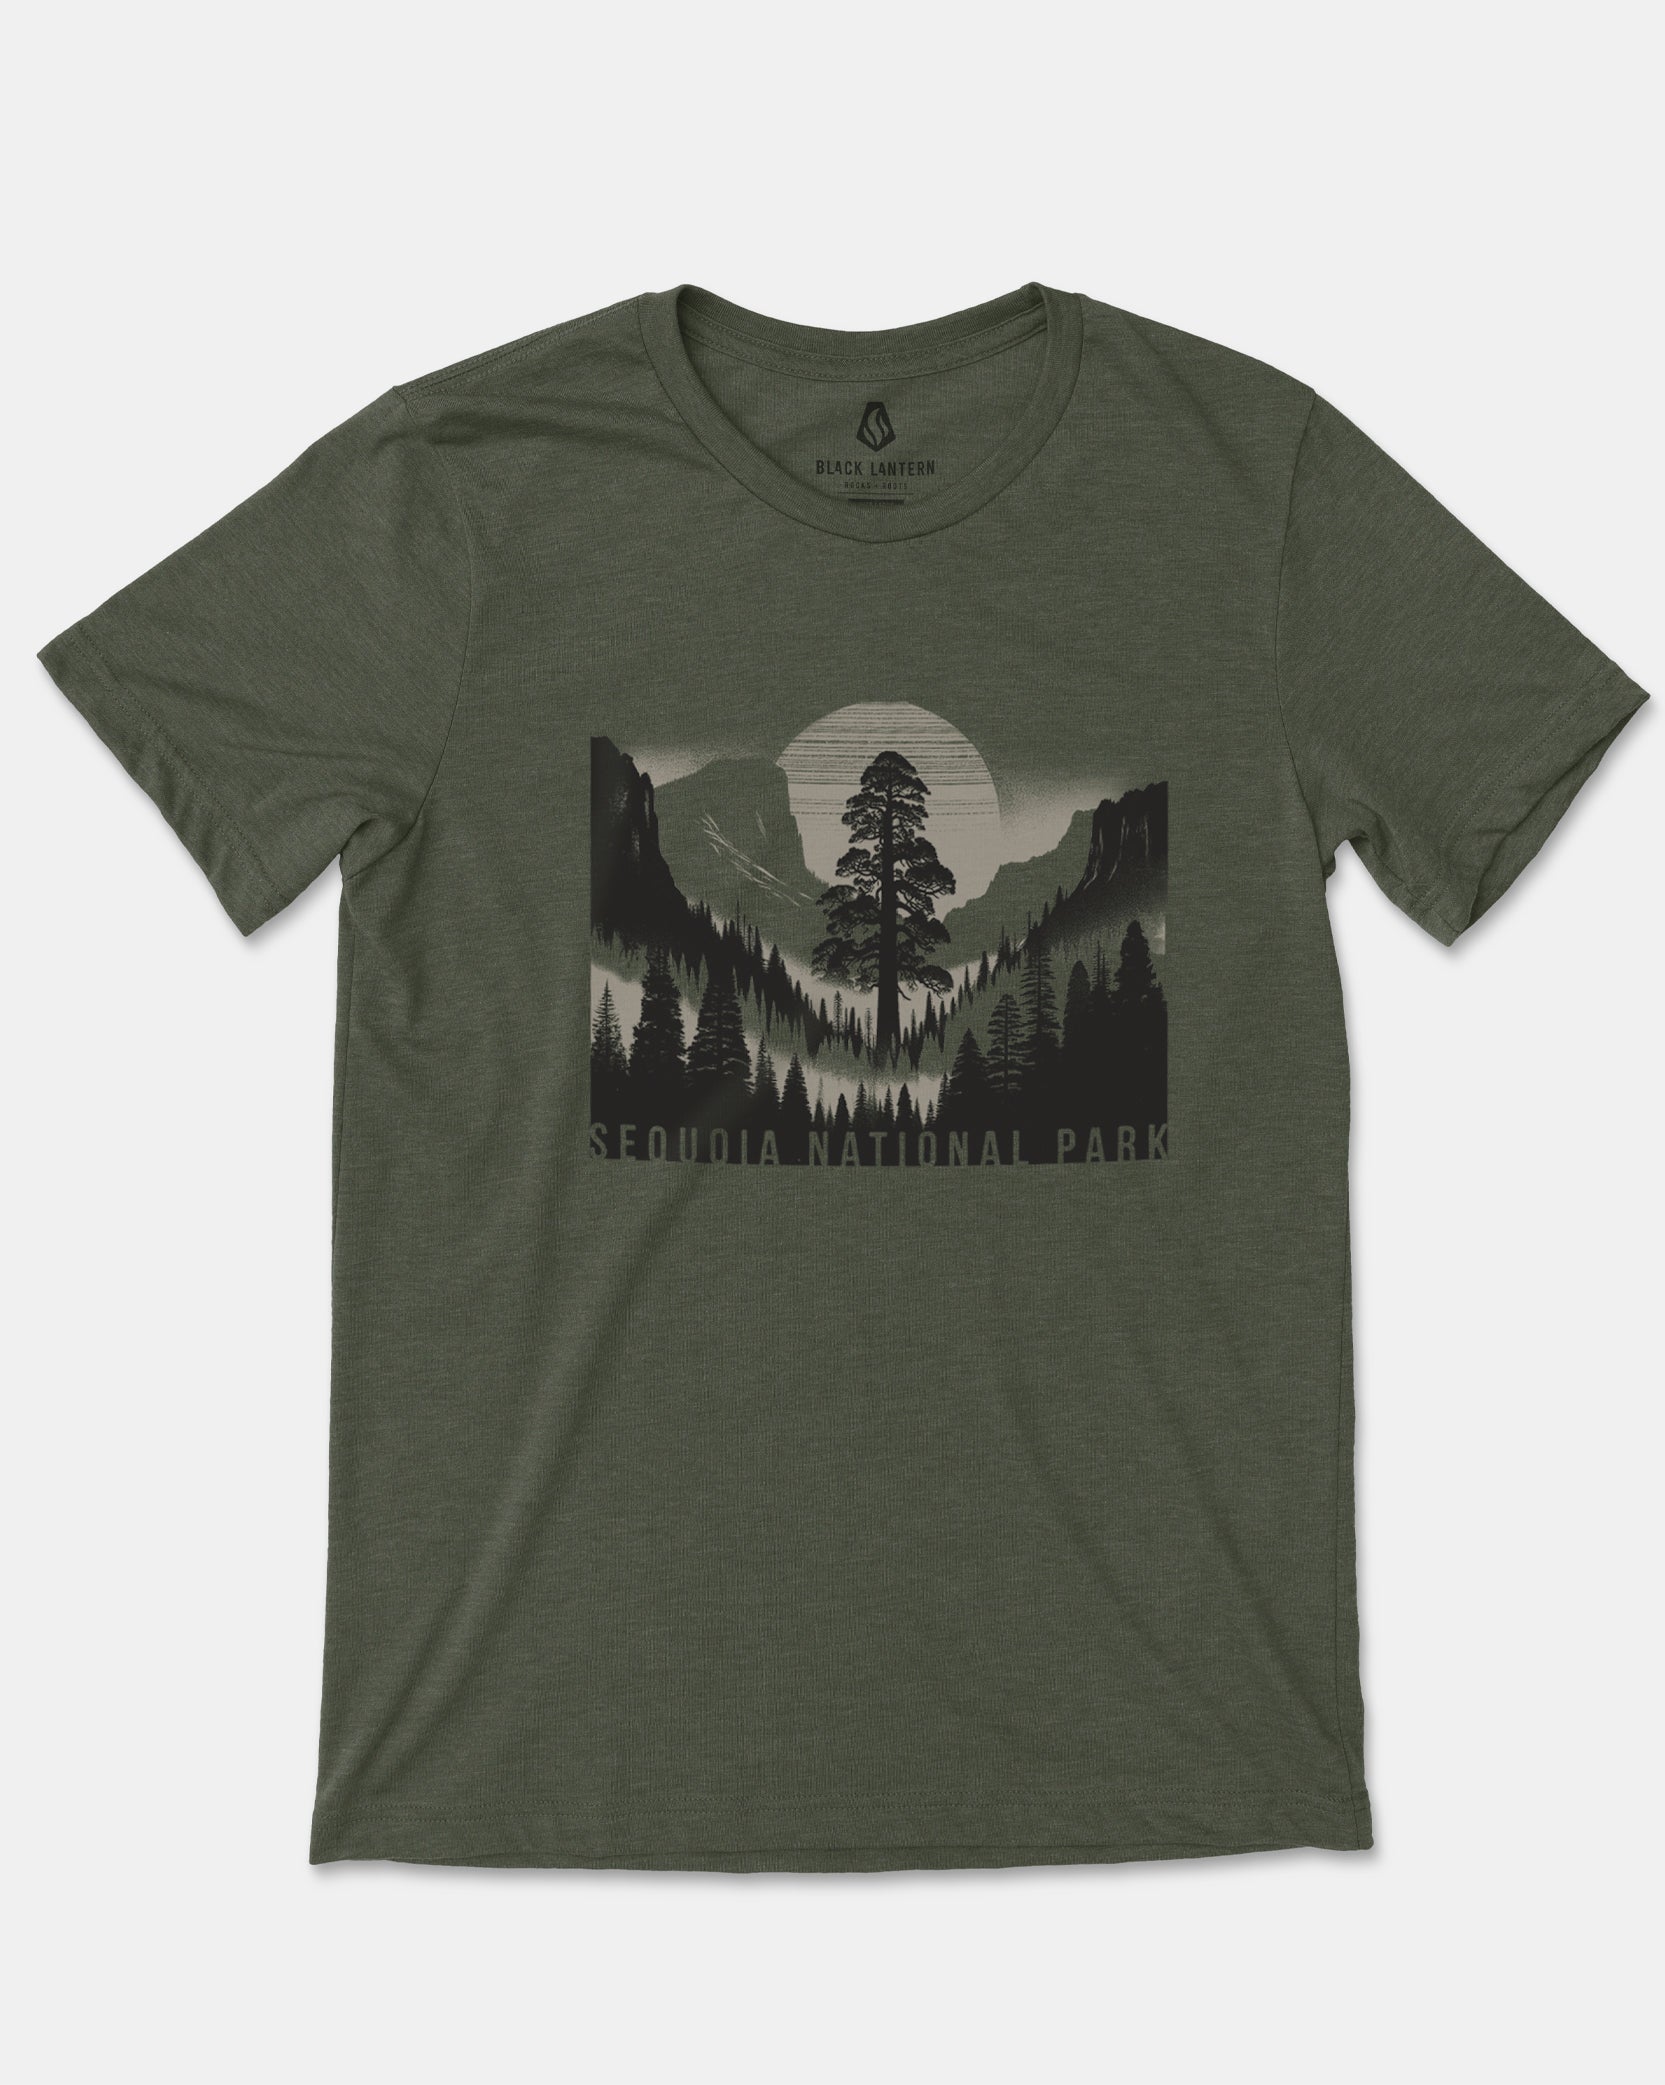 Mens Sequoia National Park Tshirt 2